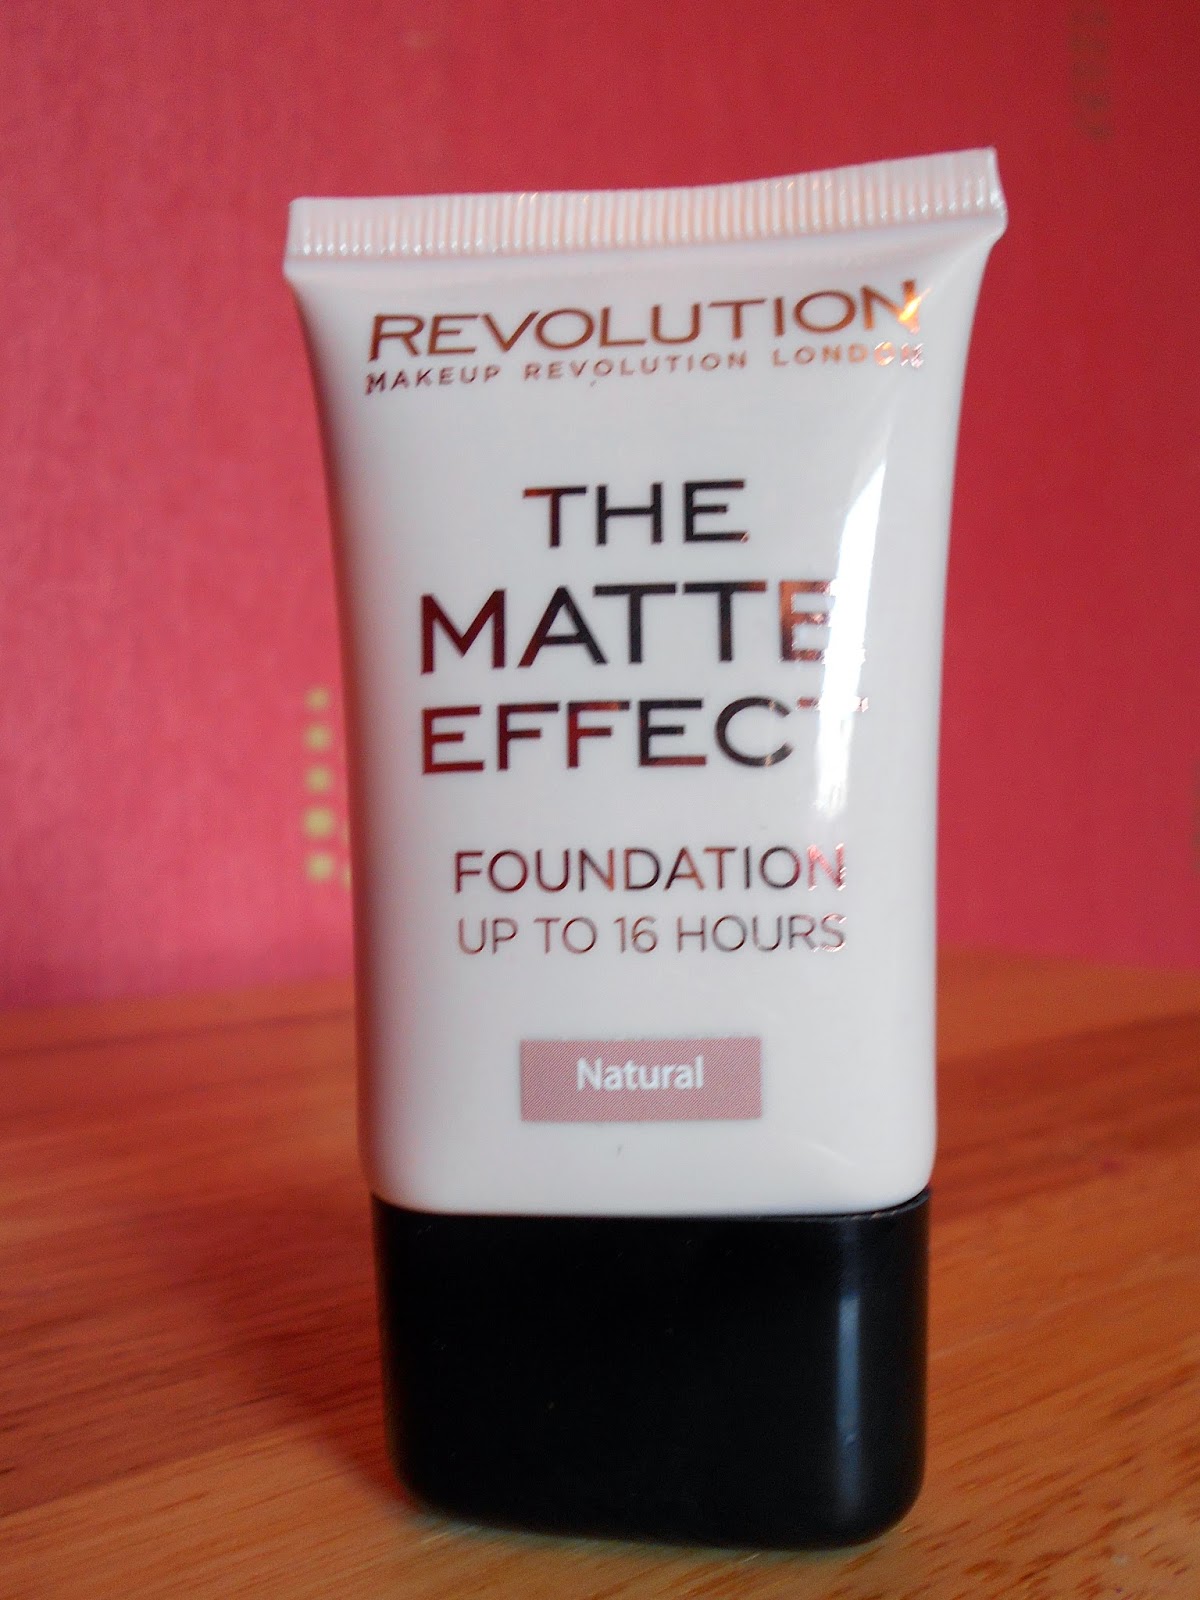 Makeup revolution new foundation